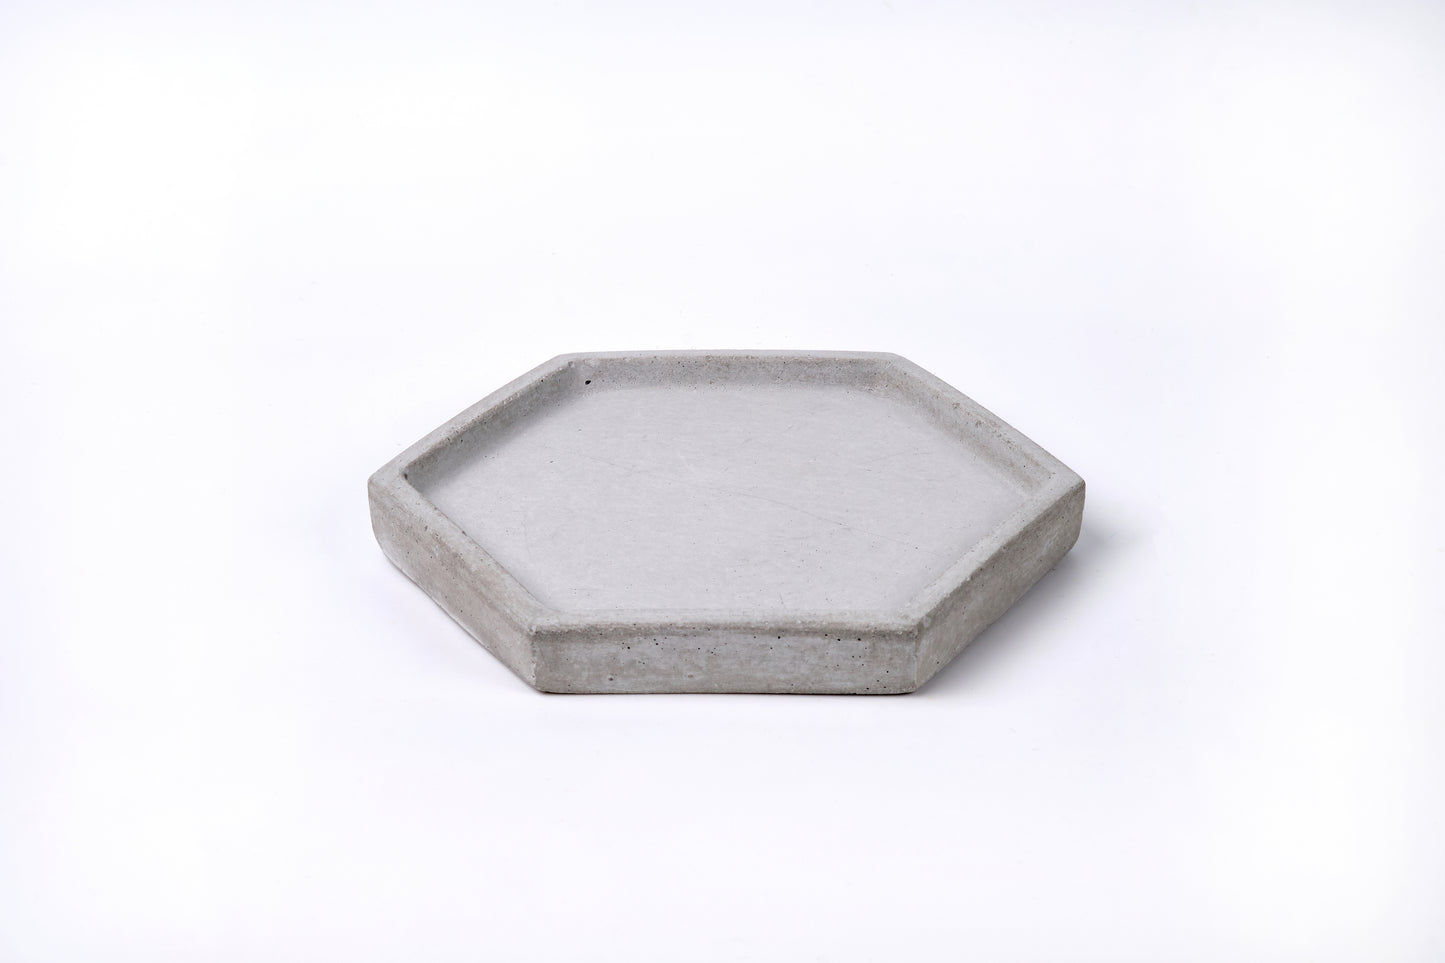 Concrete hexagon tray / accessory holder (small) - "grey"